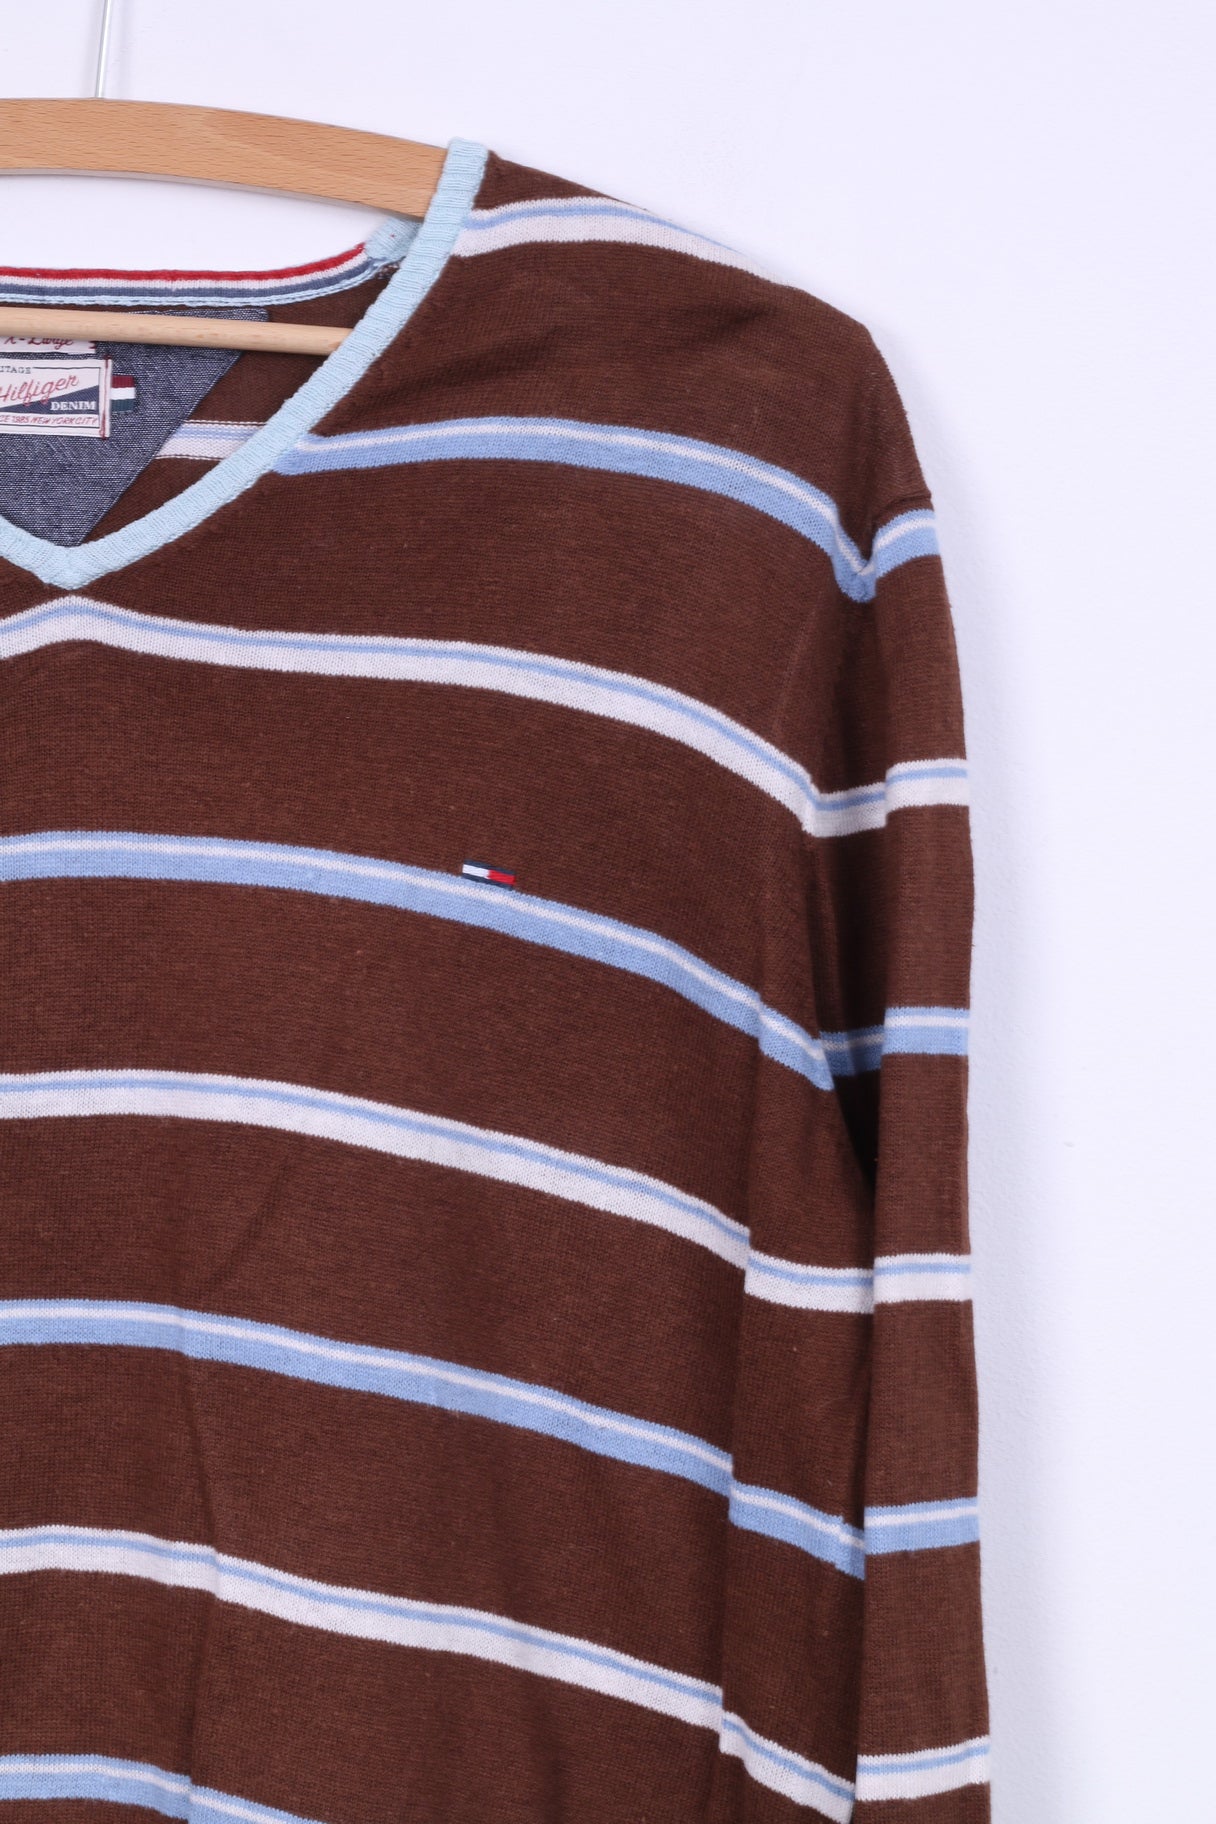 Hilfiger Denim Mens XL (L) Jumper Brown Striped V Neck Linen Cotton Blend Light Sweater